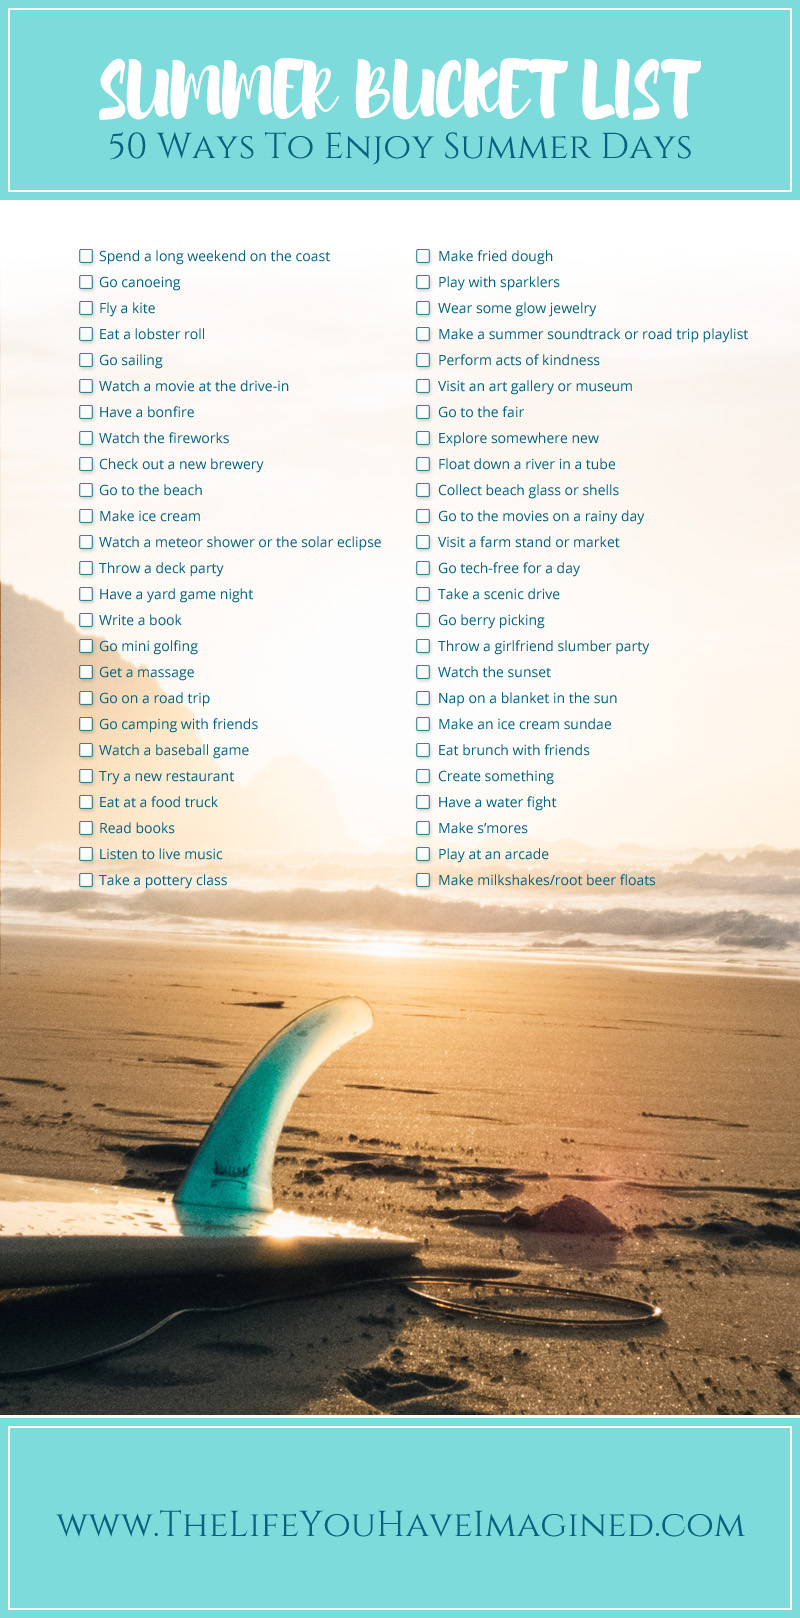 Downloadable PDF checklist of 50 Summer bucket list activities 